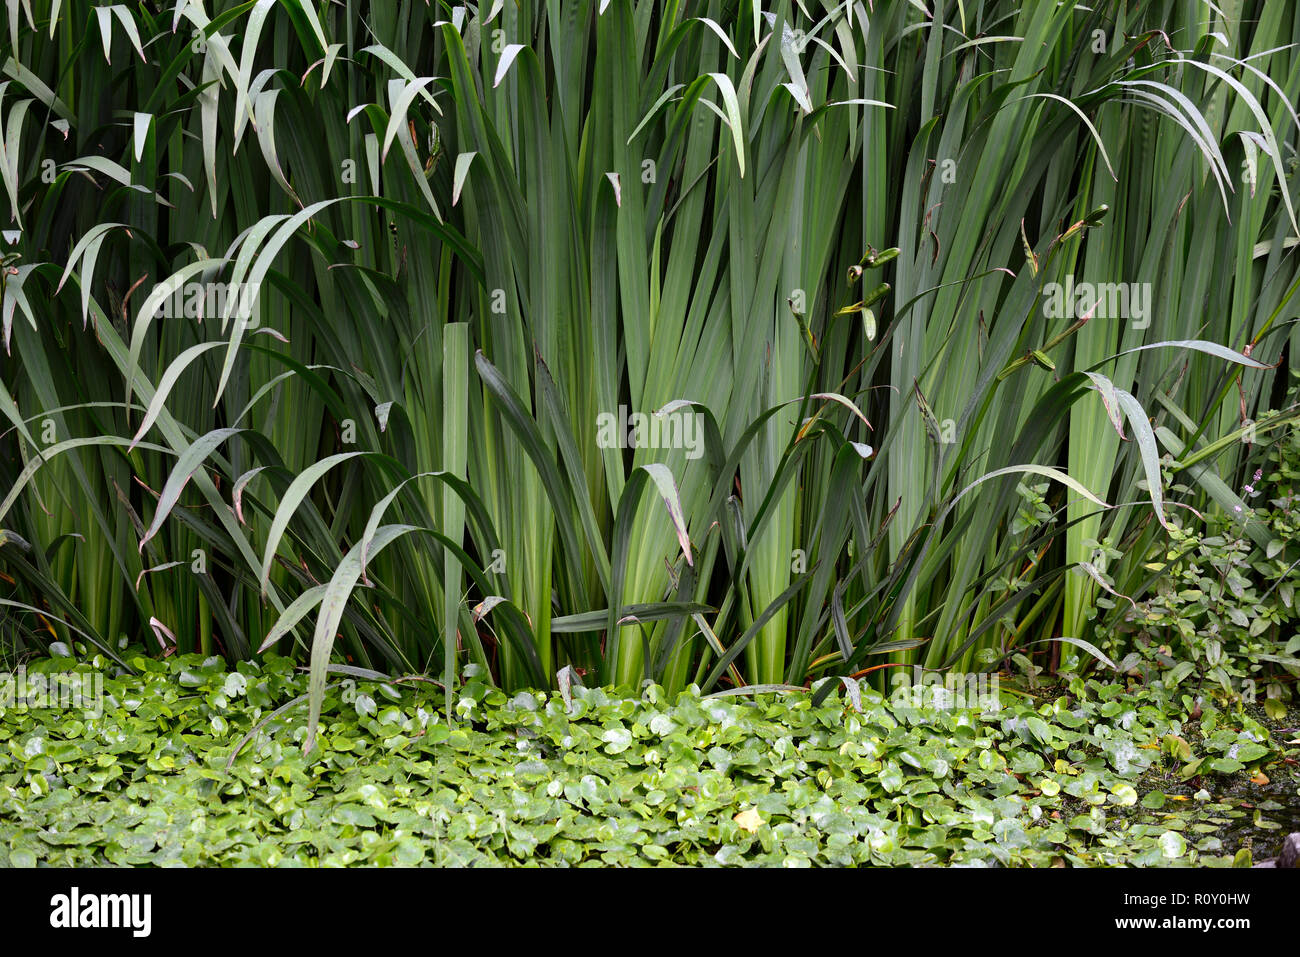 Bandera iris,tallo,tallos,densa,invasivo,planta,plantas,estanque,estanques,agua,jardines florales,RM Foto de stock